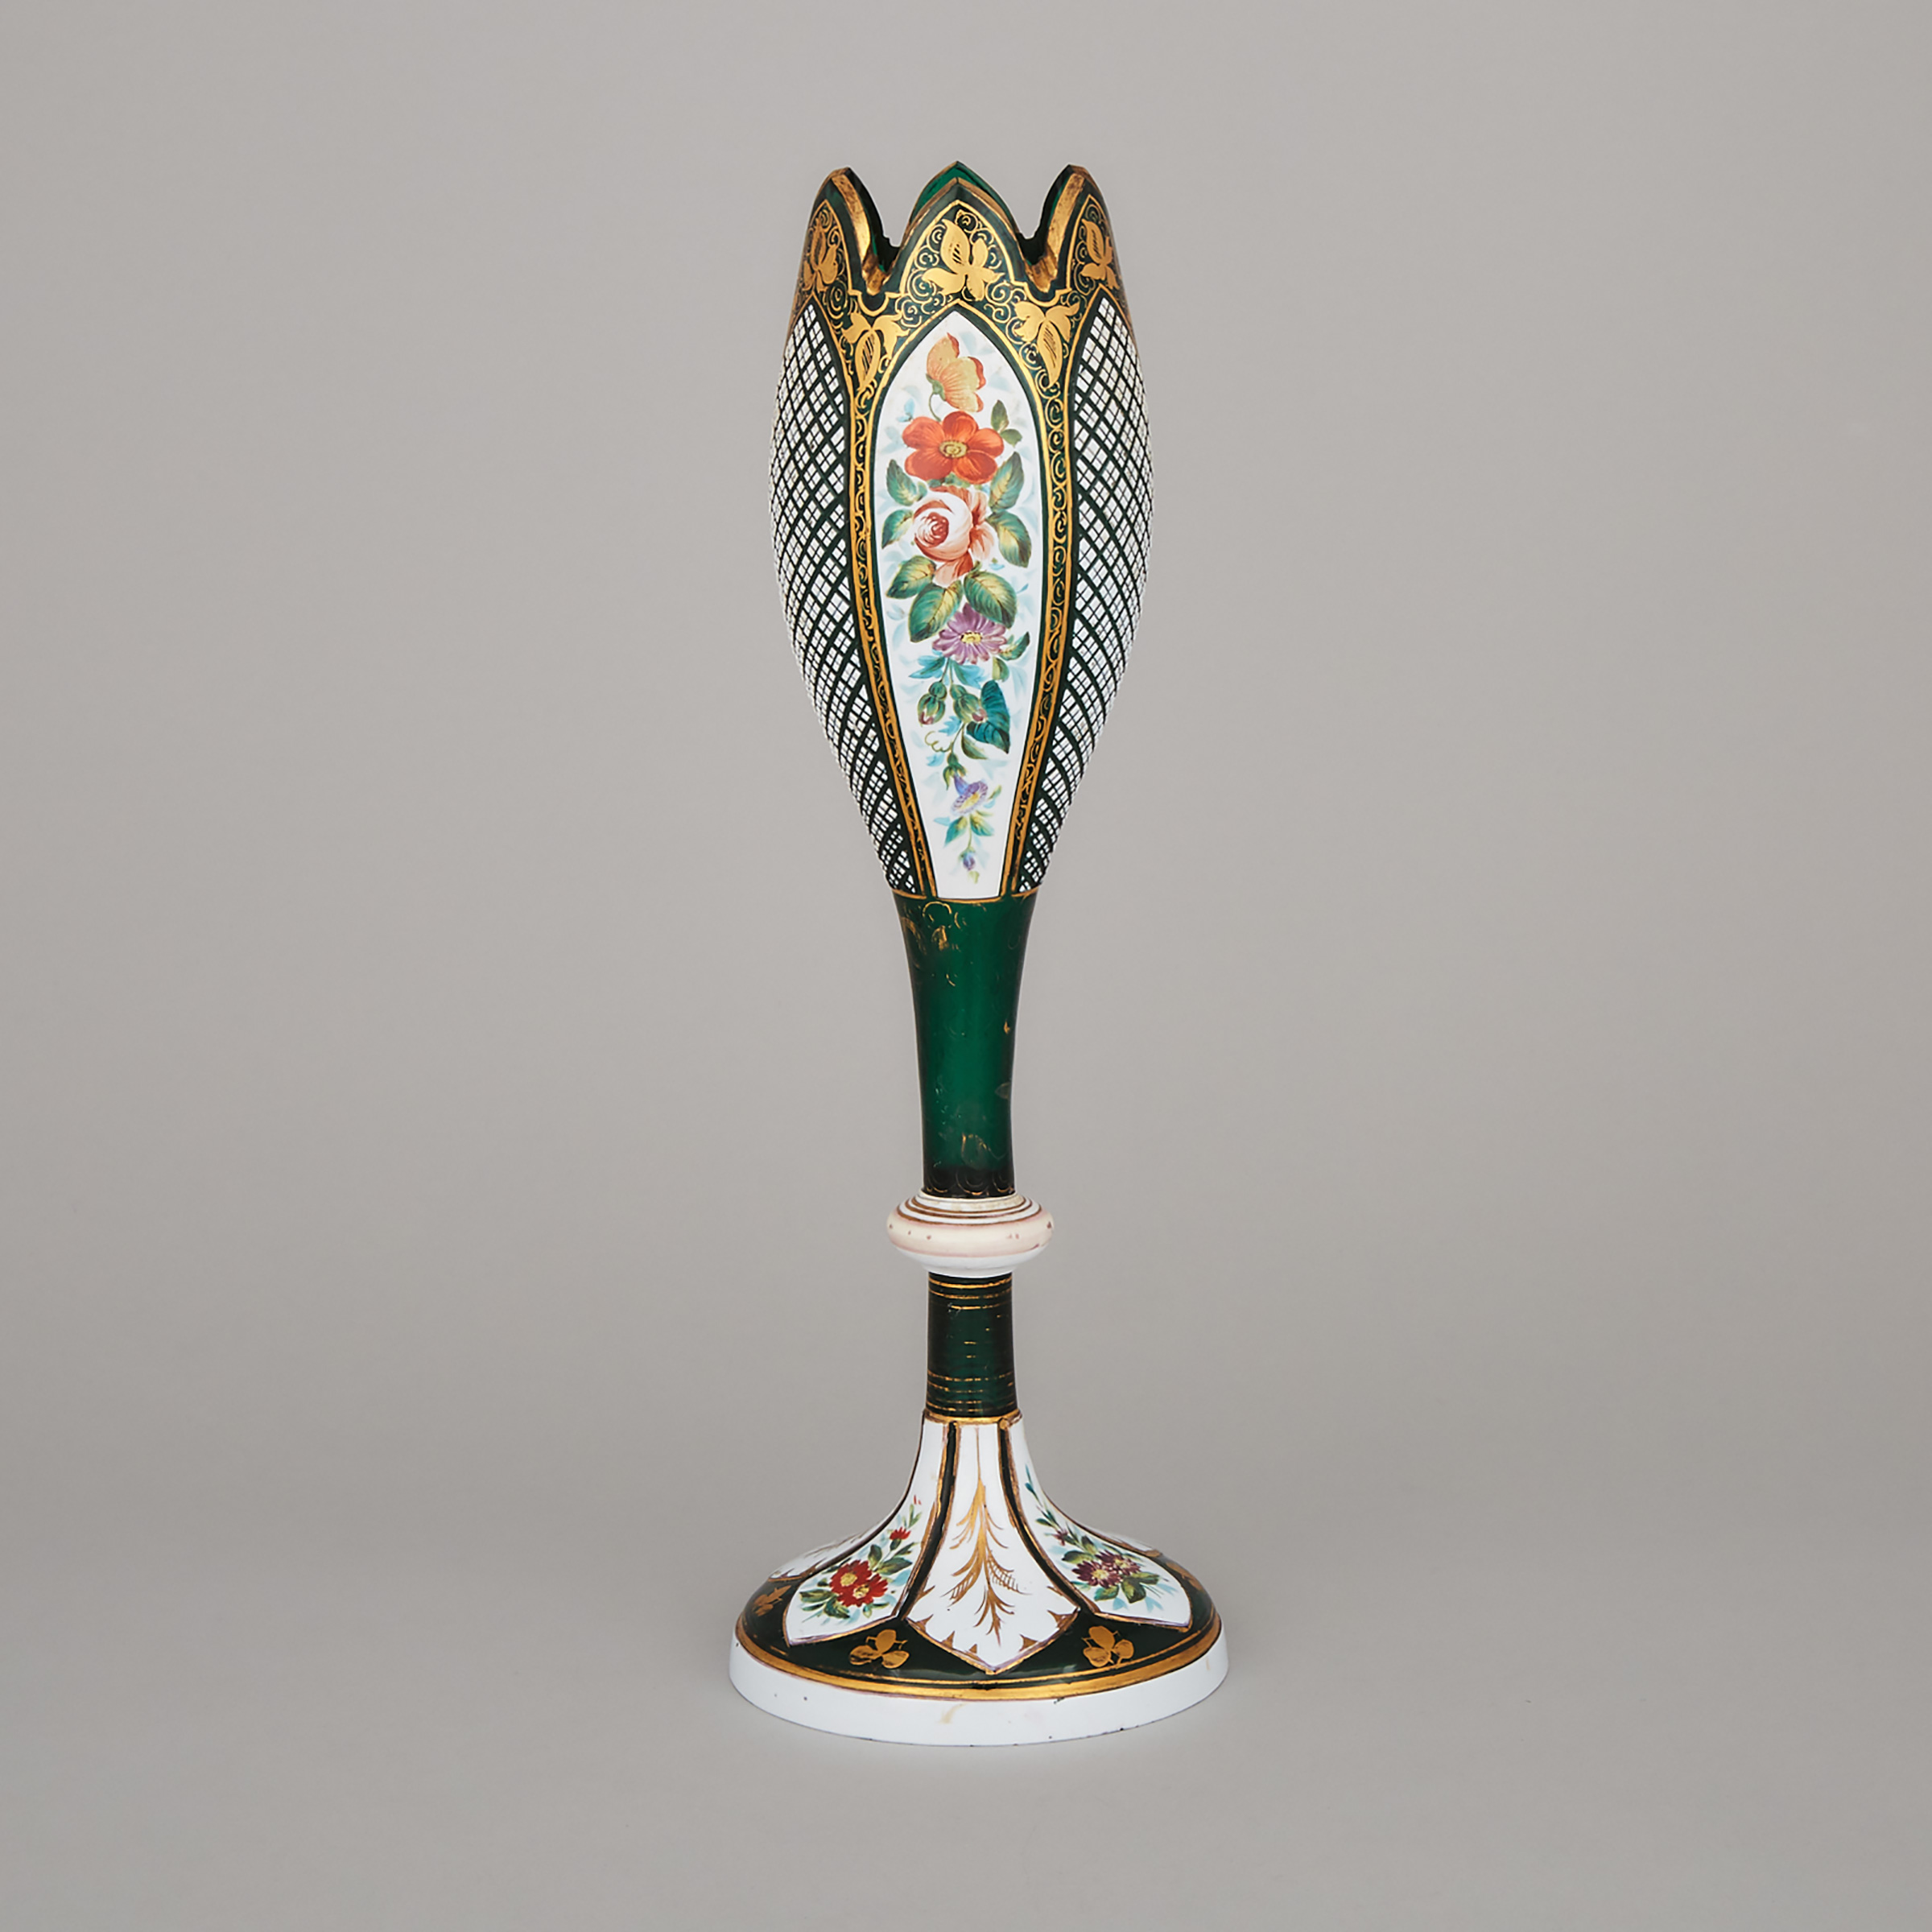 Bohemian Overlaid, Enameled and Gilt Green Glass Vase, late 19th century